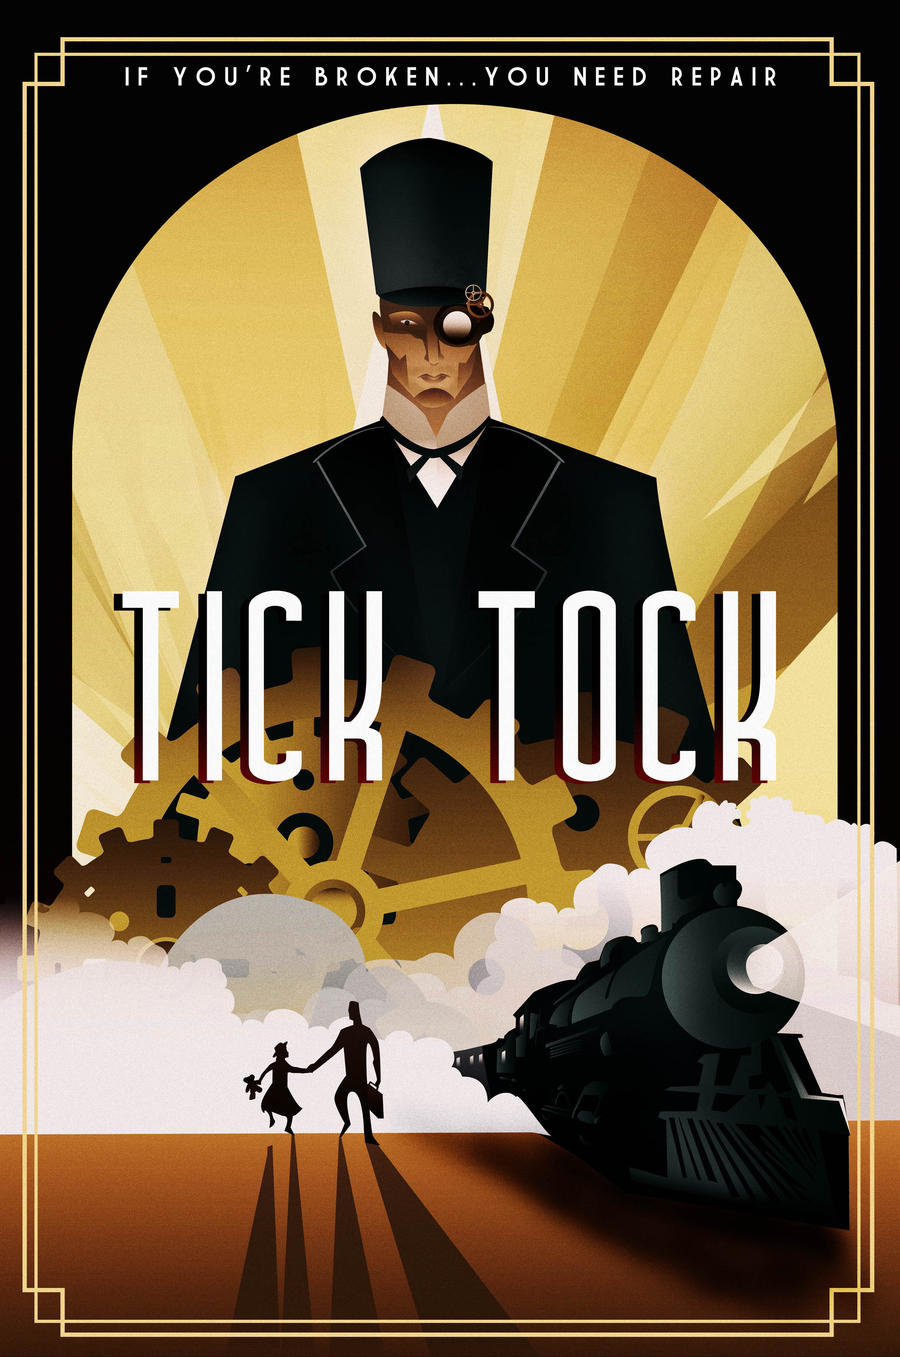 tick_tock_movie_poster_by_rodolforever-d3iuojz.jpg